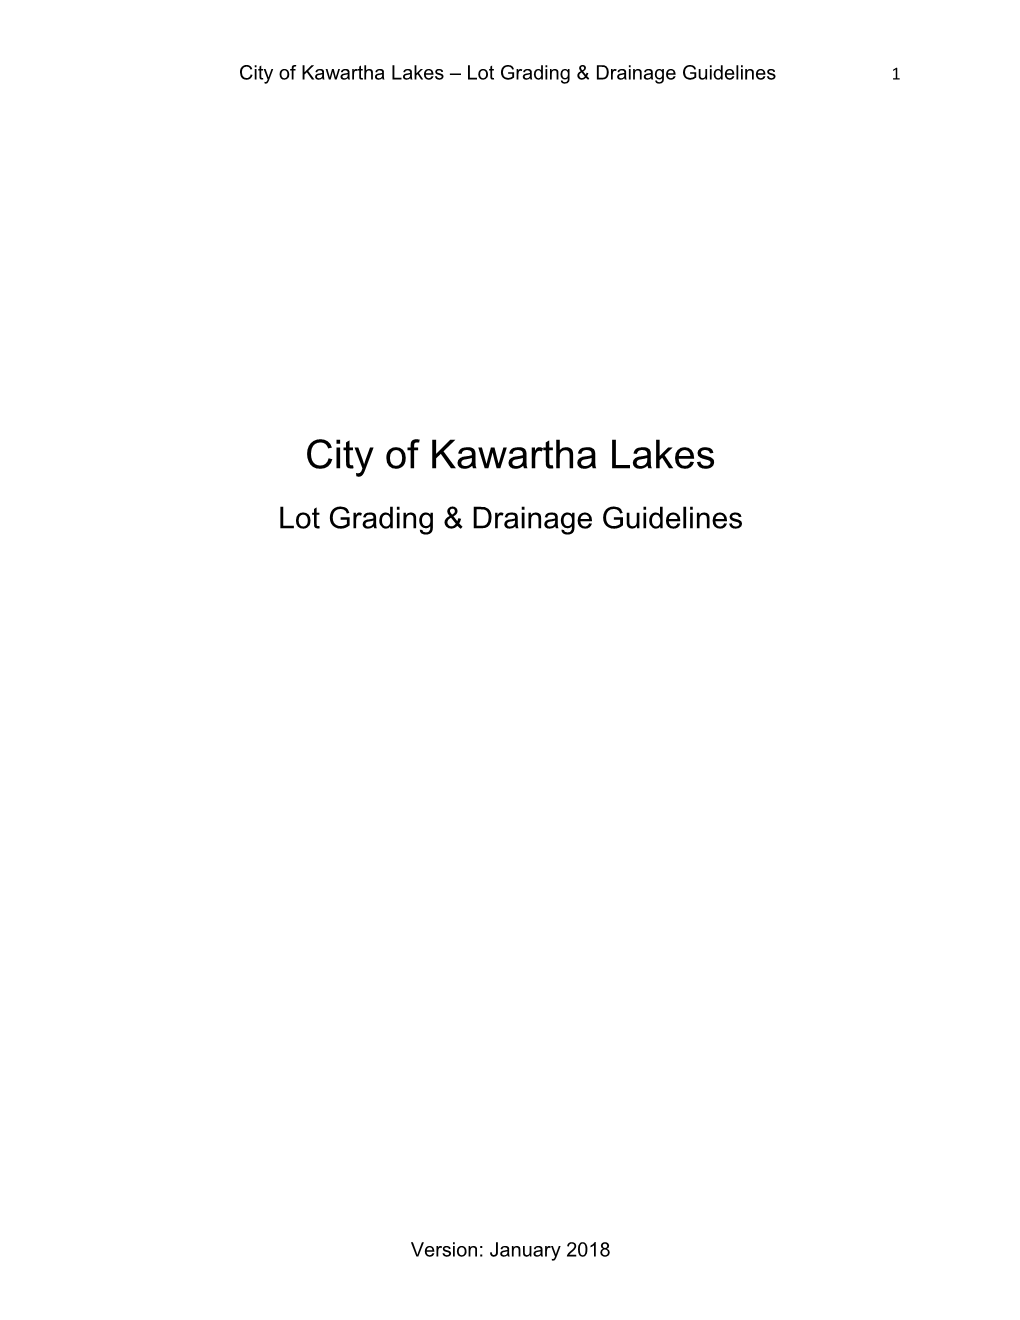 City of Kawartha Lakes Lot Grading & Drainage Guidelines1